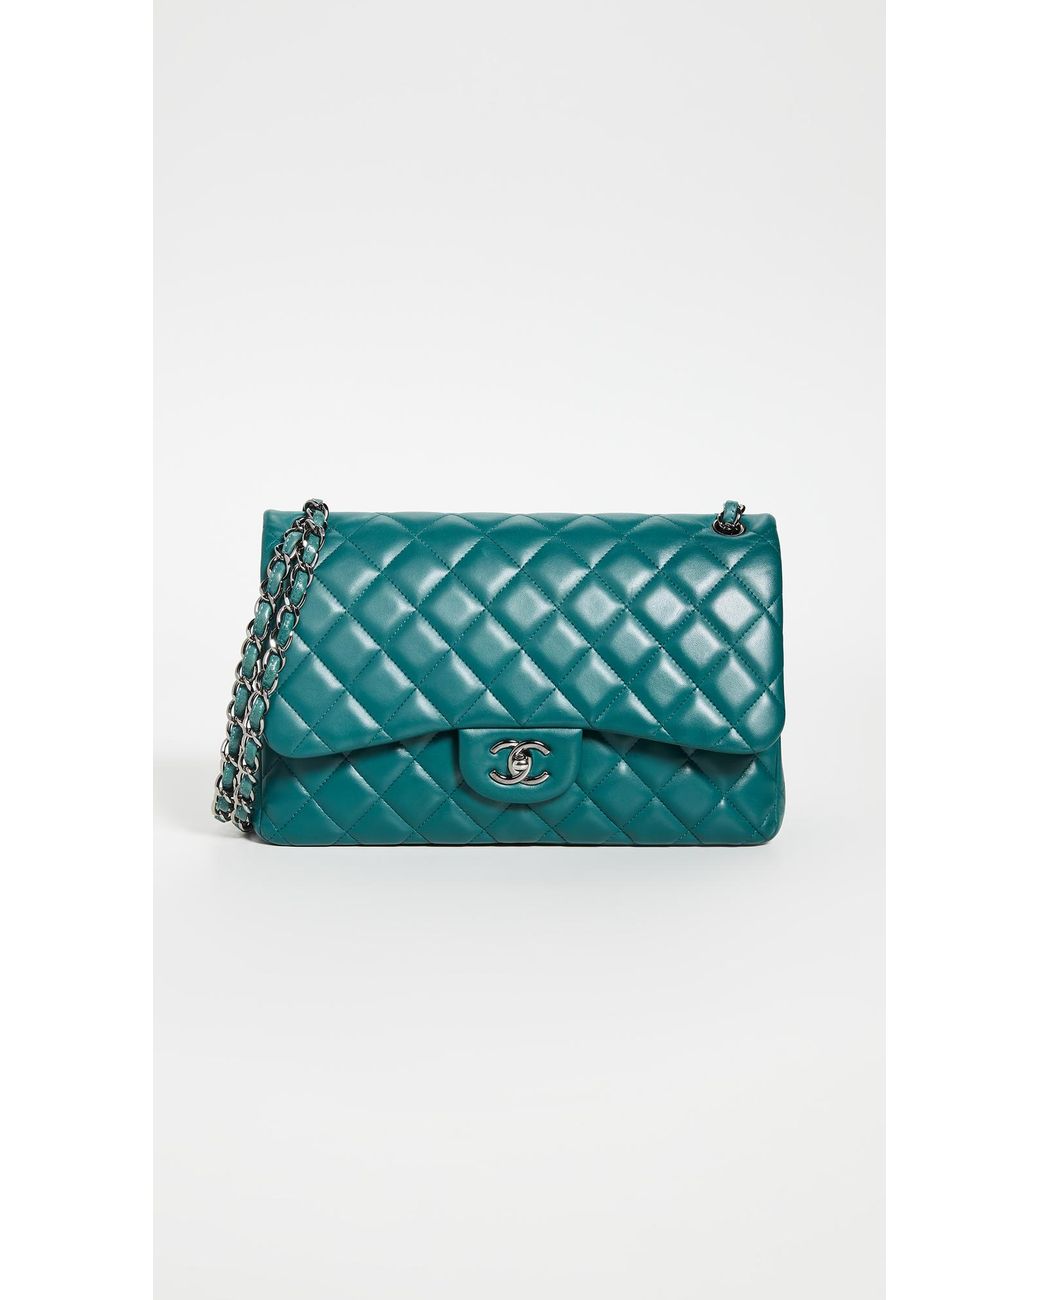 Chanel New Classic Jumbo Bag in Green